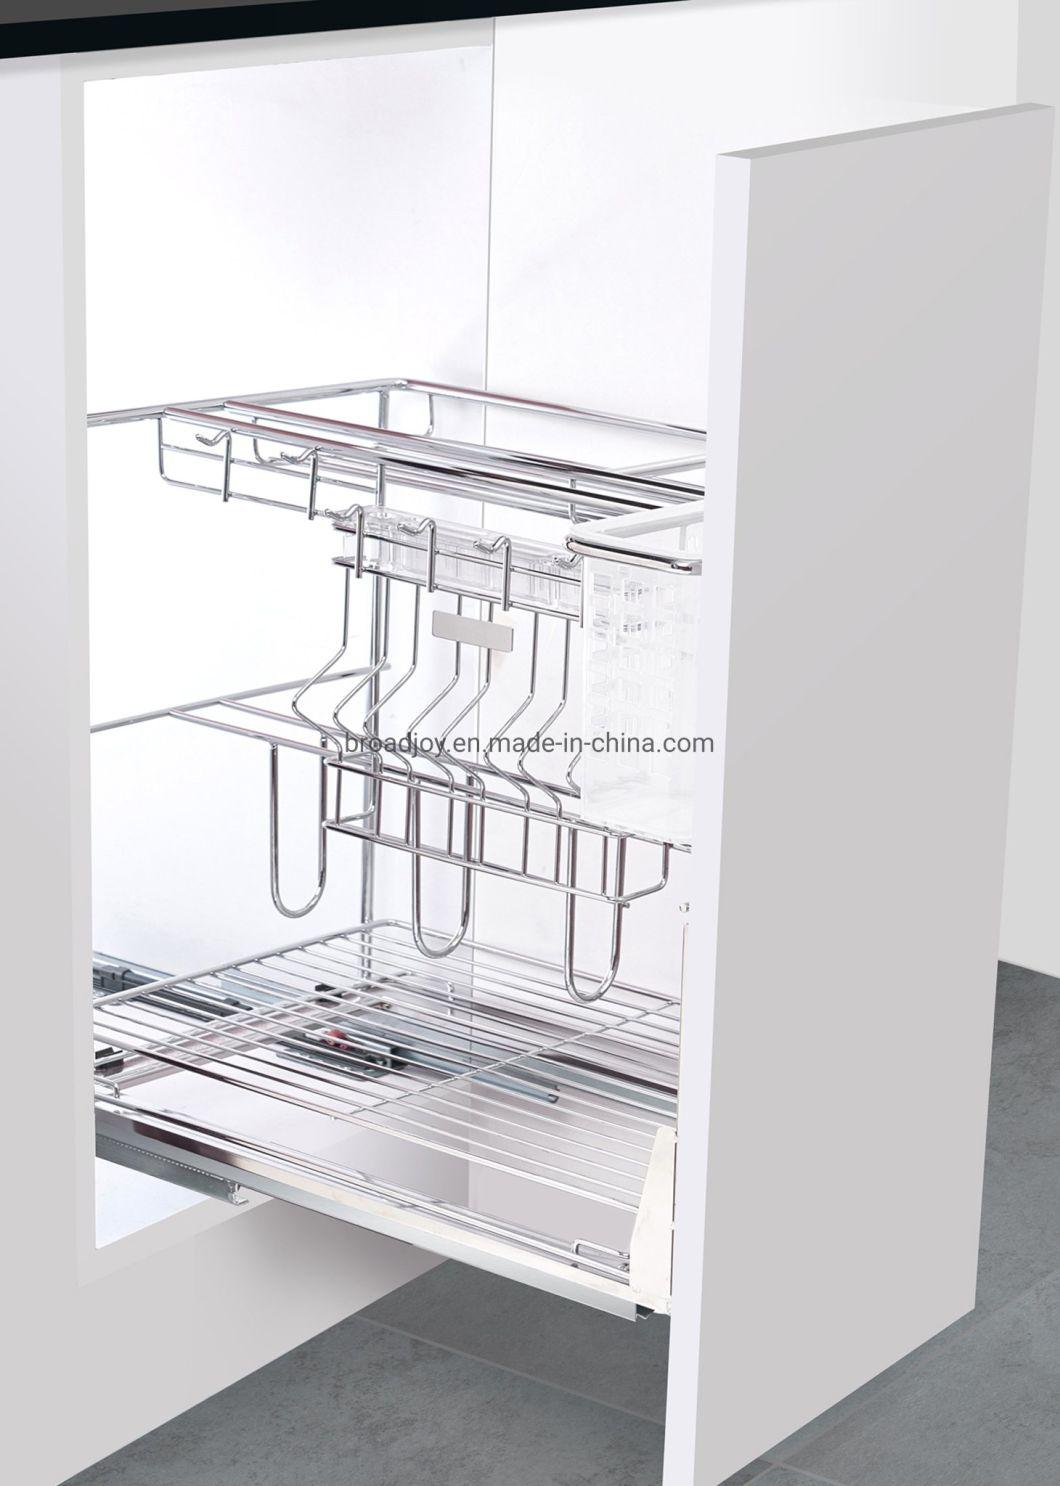 Kitchen Cupboard Stainless Steel 201 300mm Cabinet Storage Drawer Slide out Basket Holder Rack